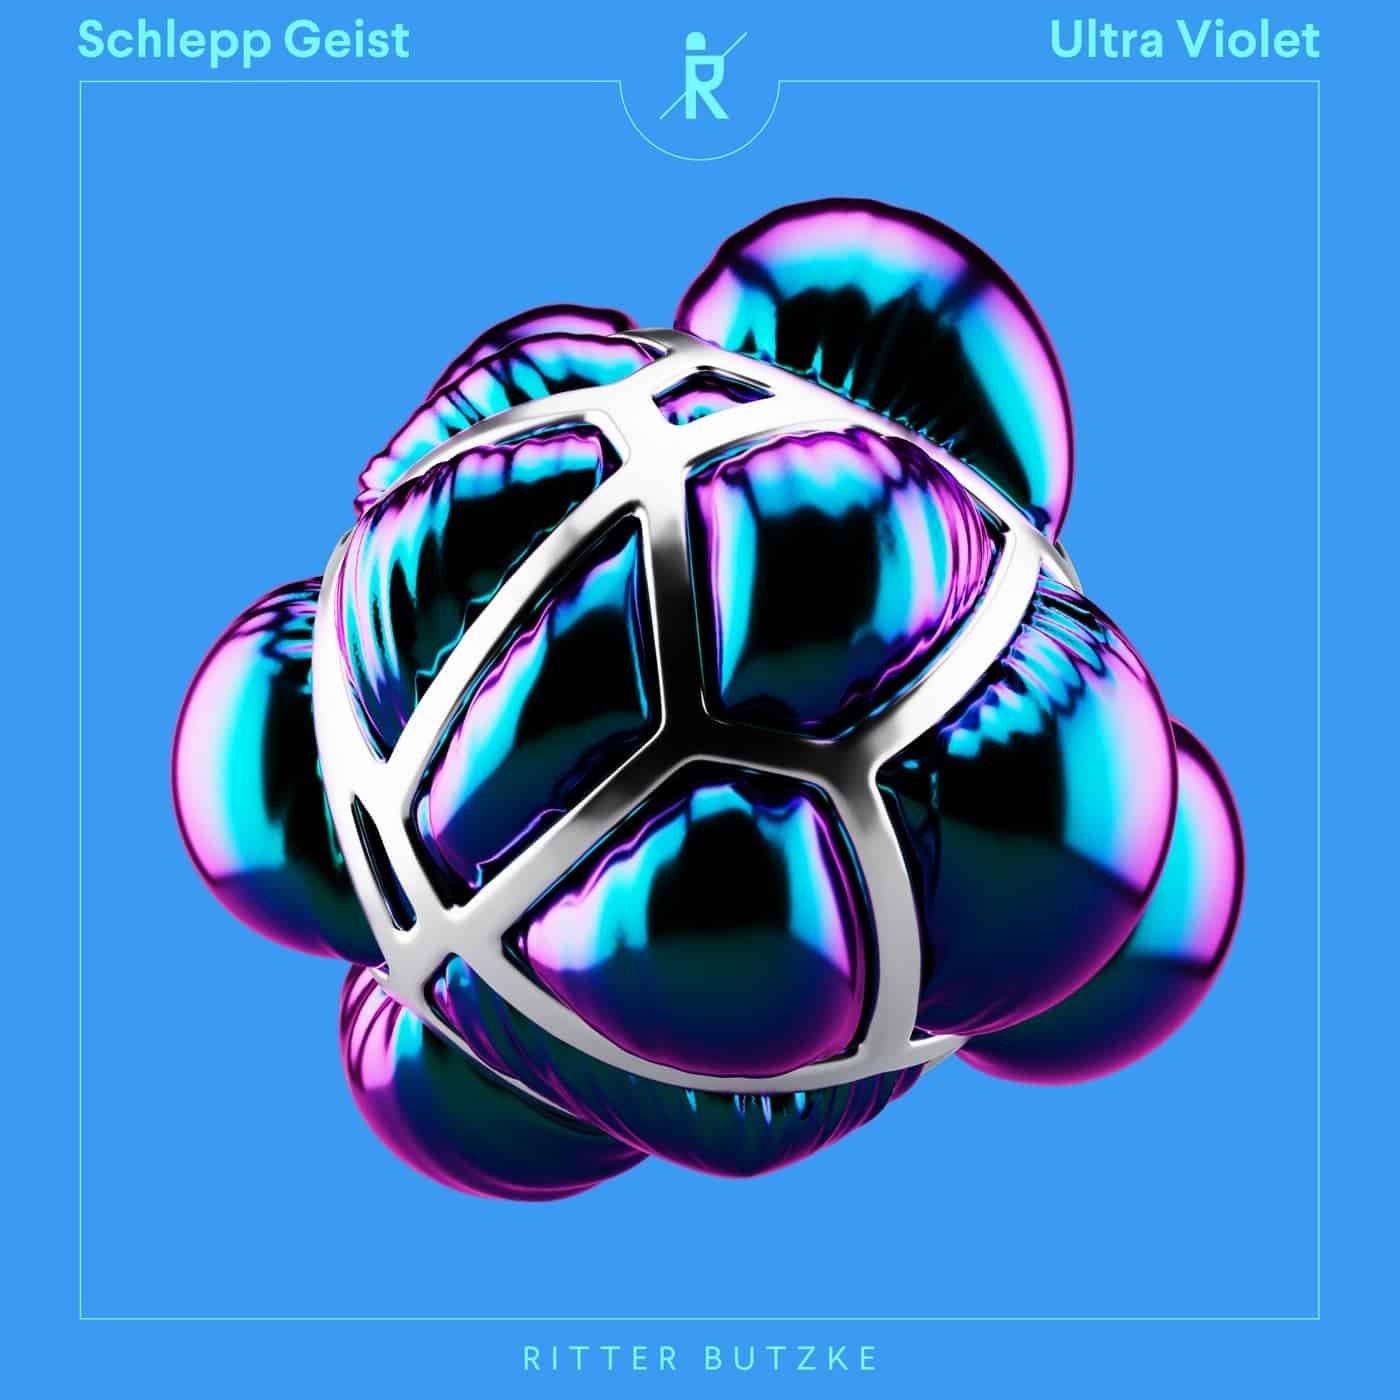 Download Schlepp Geist - Ultra Violet on Electrobuzz